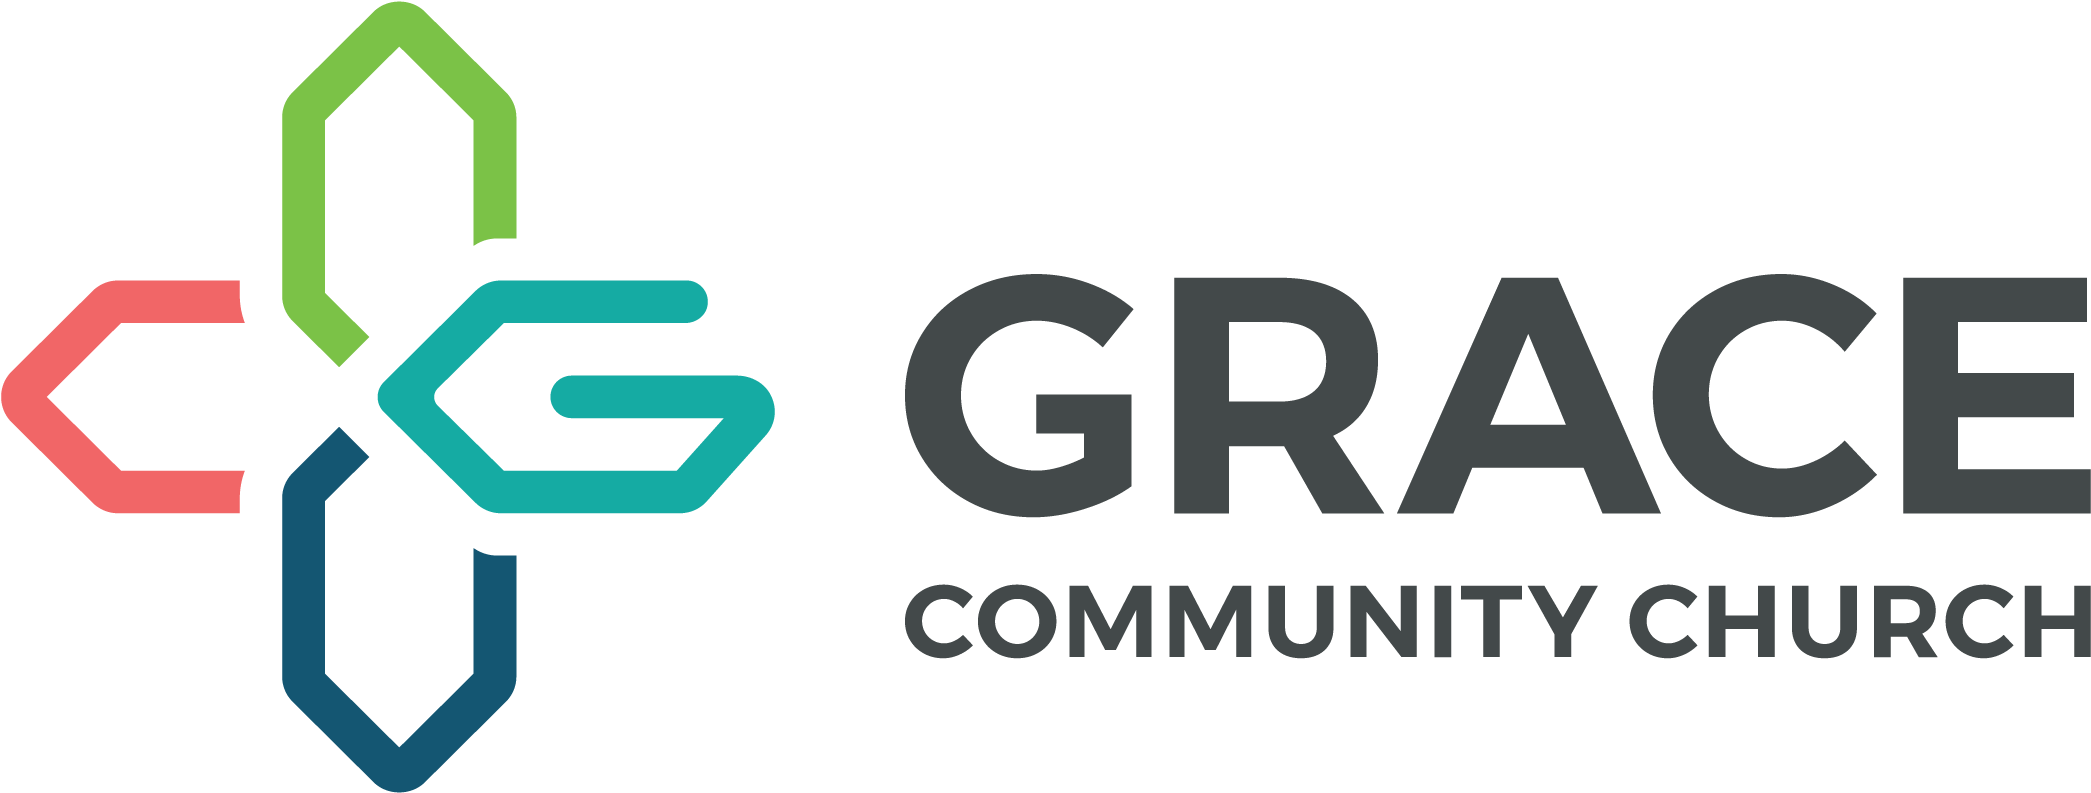 Grace Community Church - Grace Community Church Logo (2400x1200), Png Download